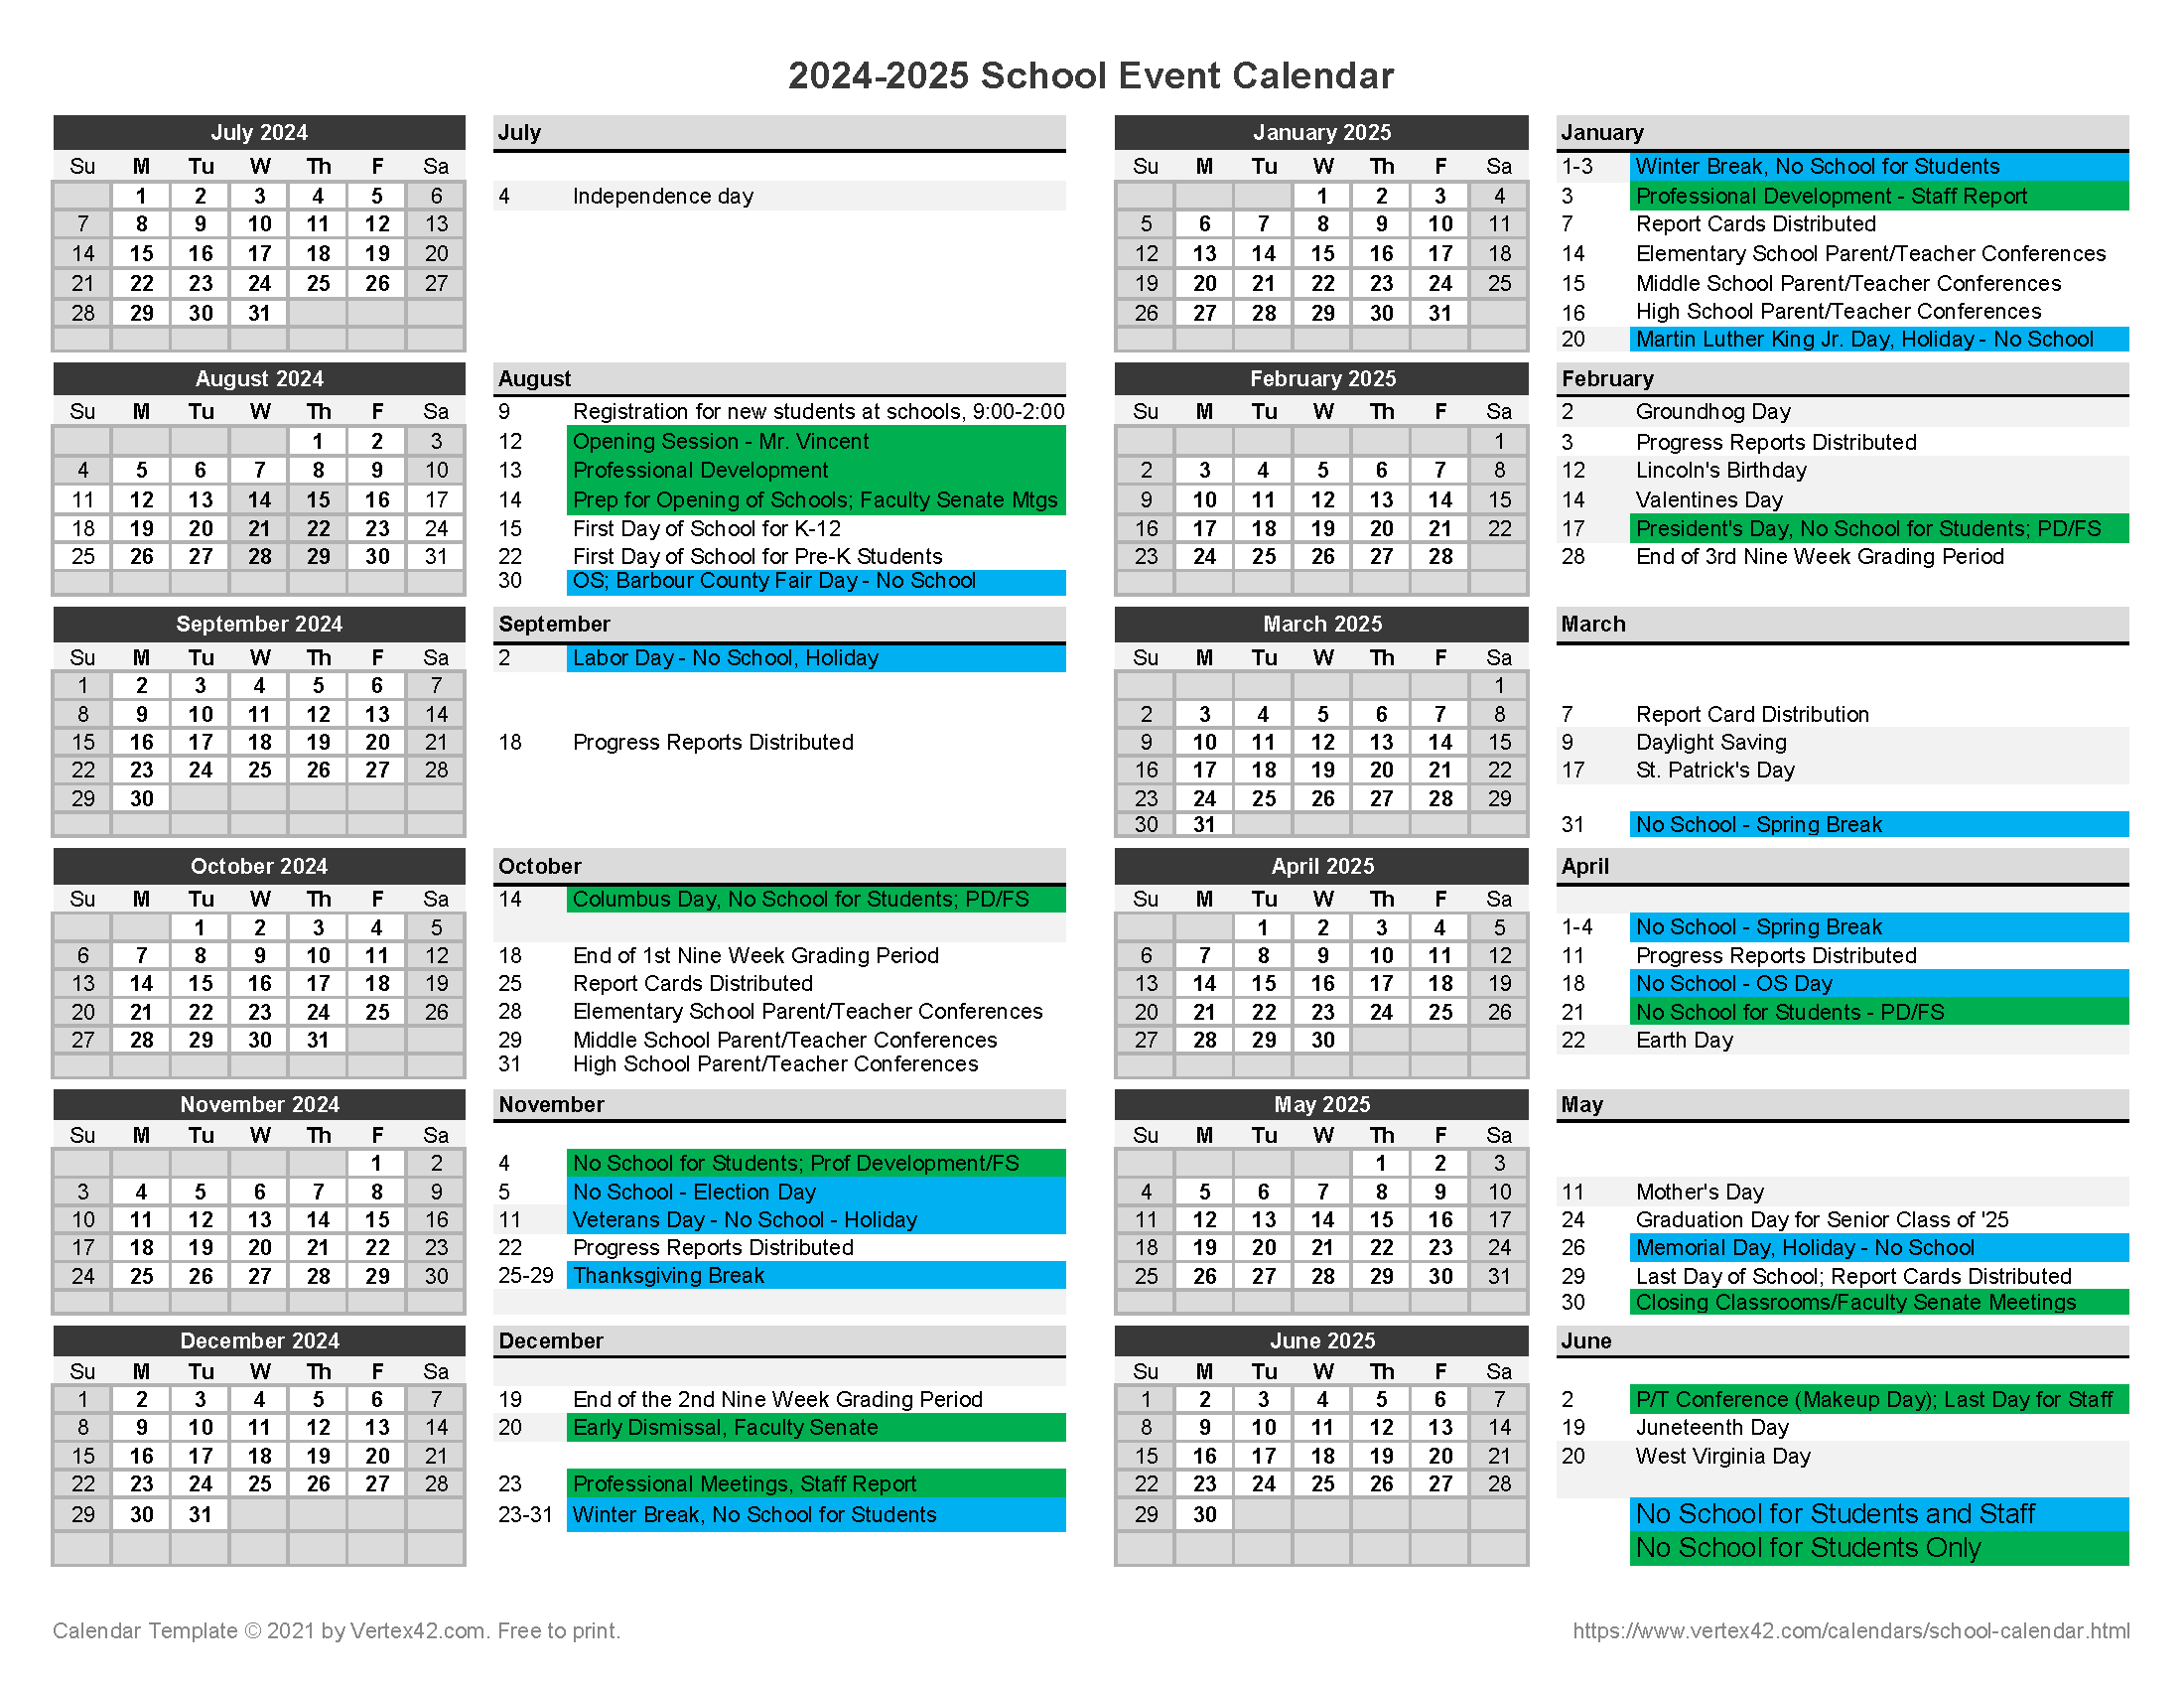 2024-2025 Calendar Synopsis